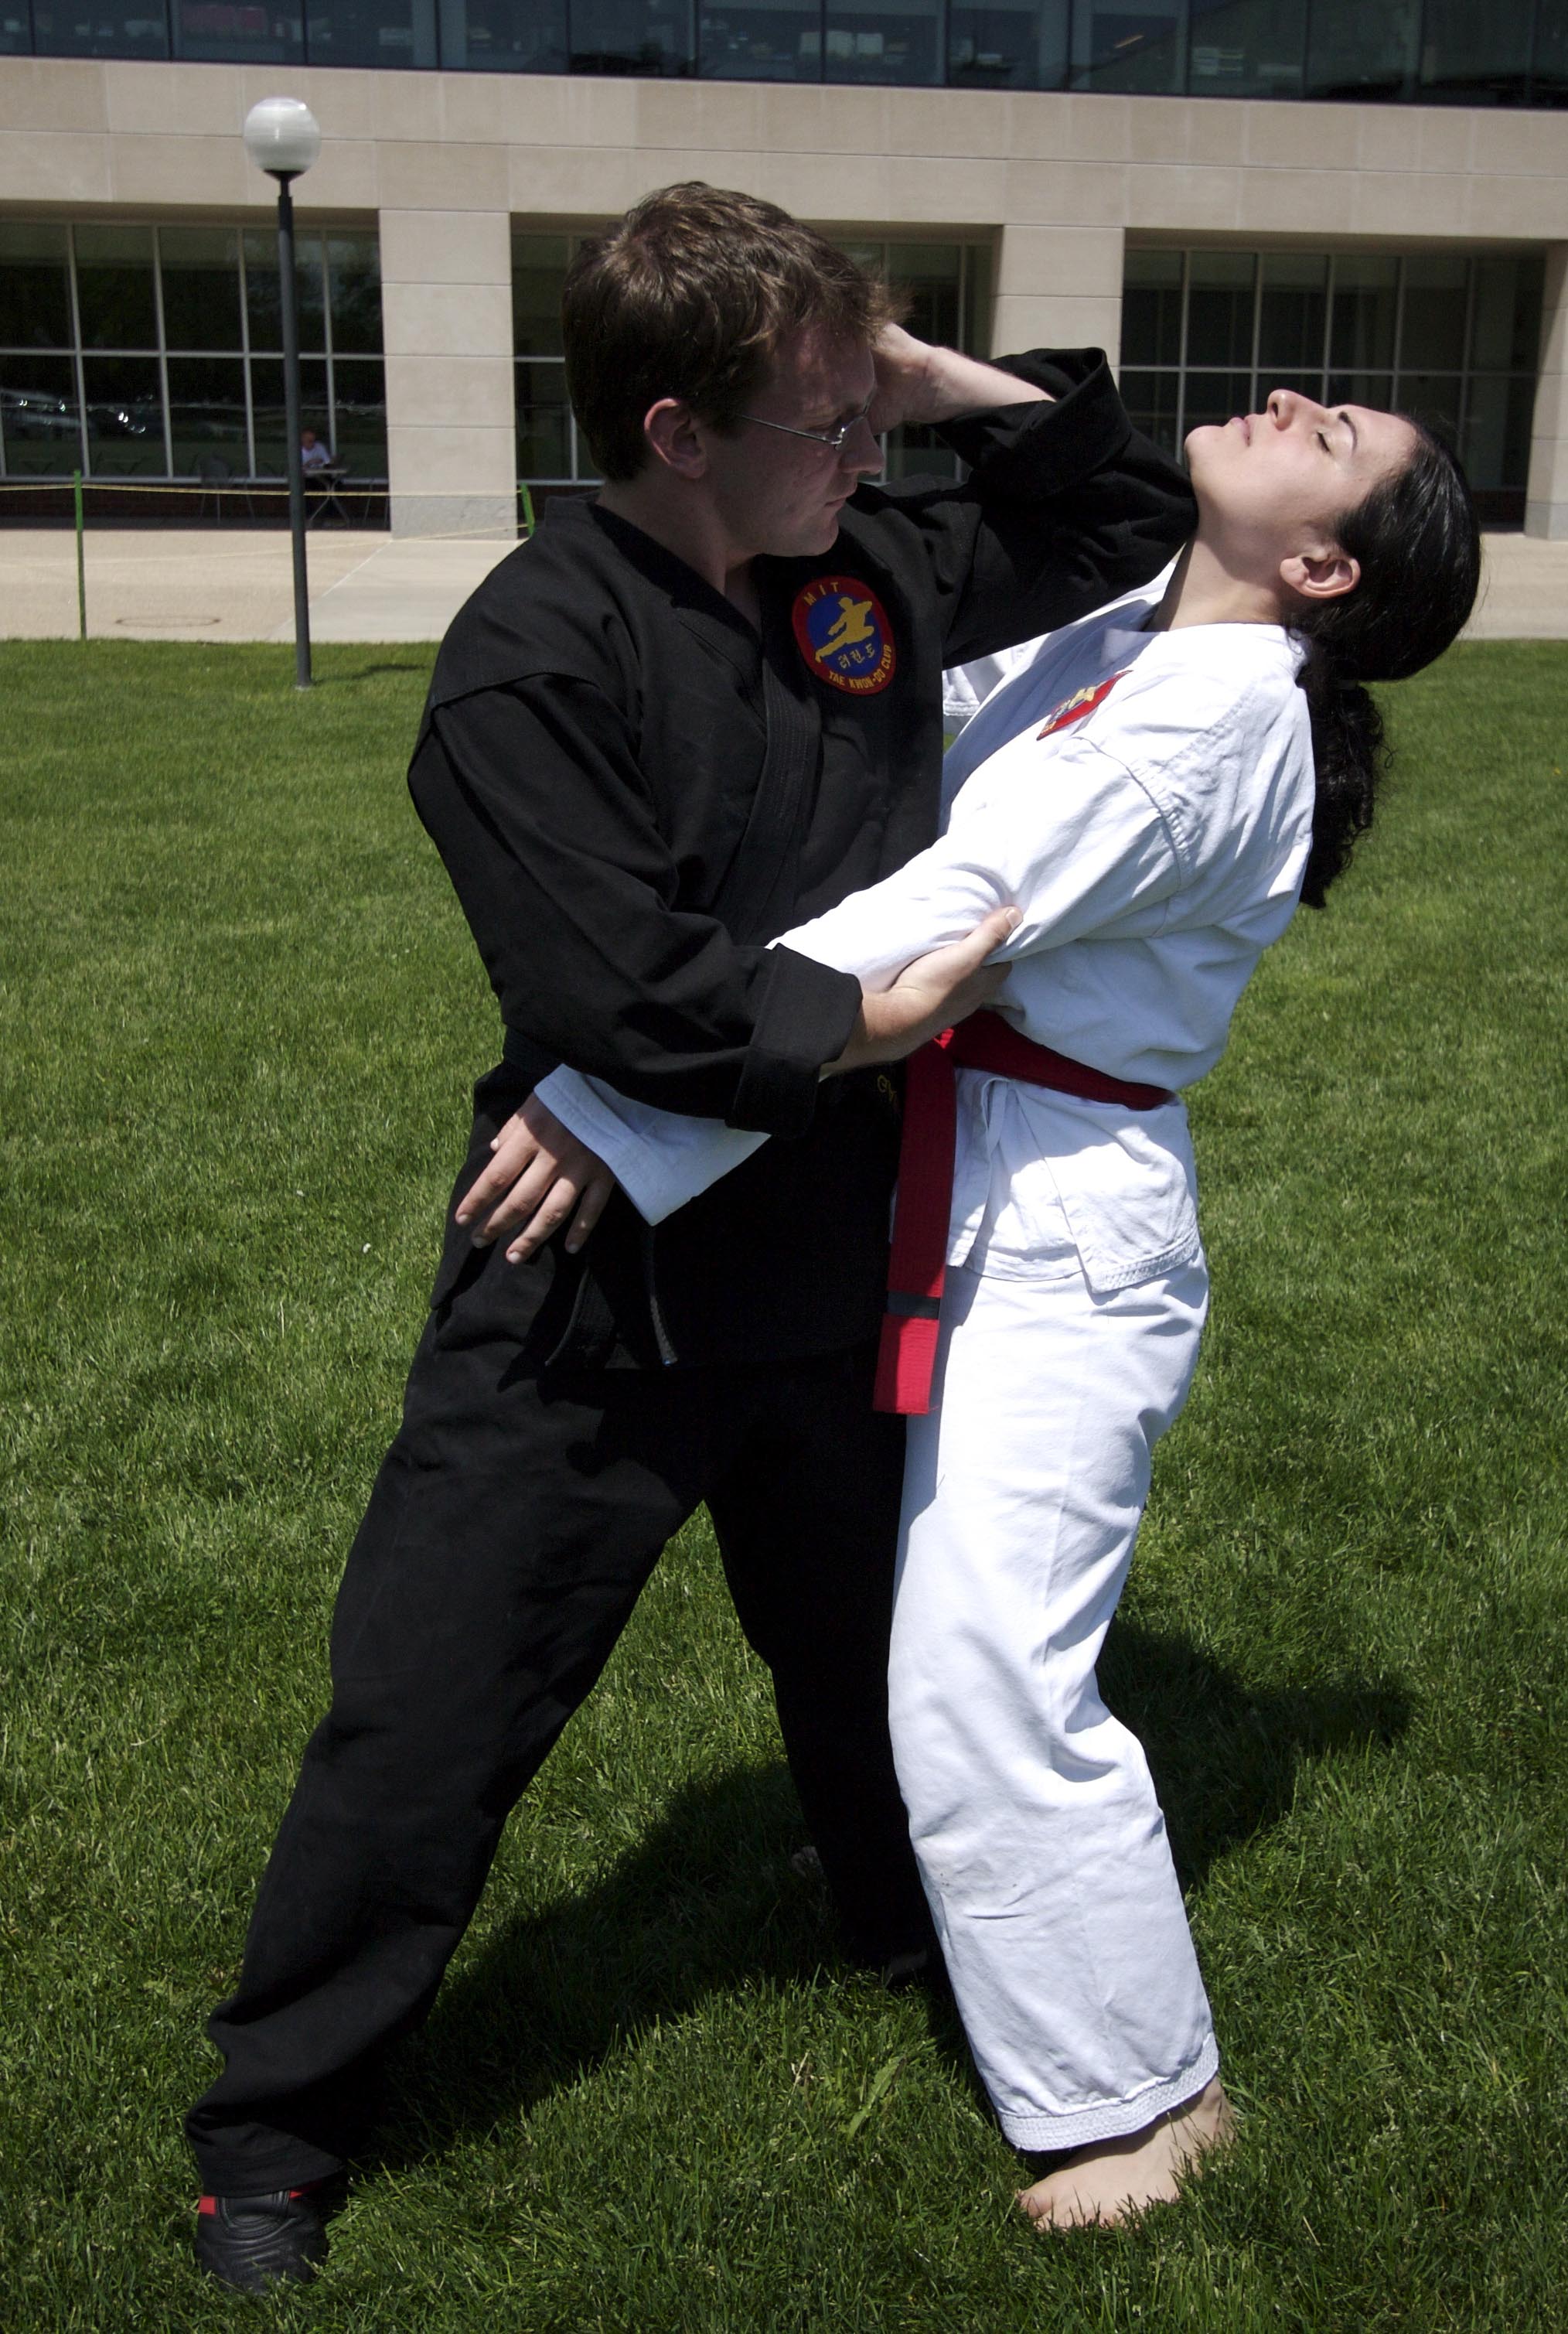 photo: Black Belt teaching Red Belt